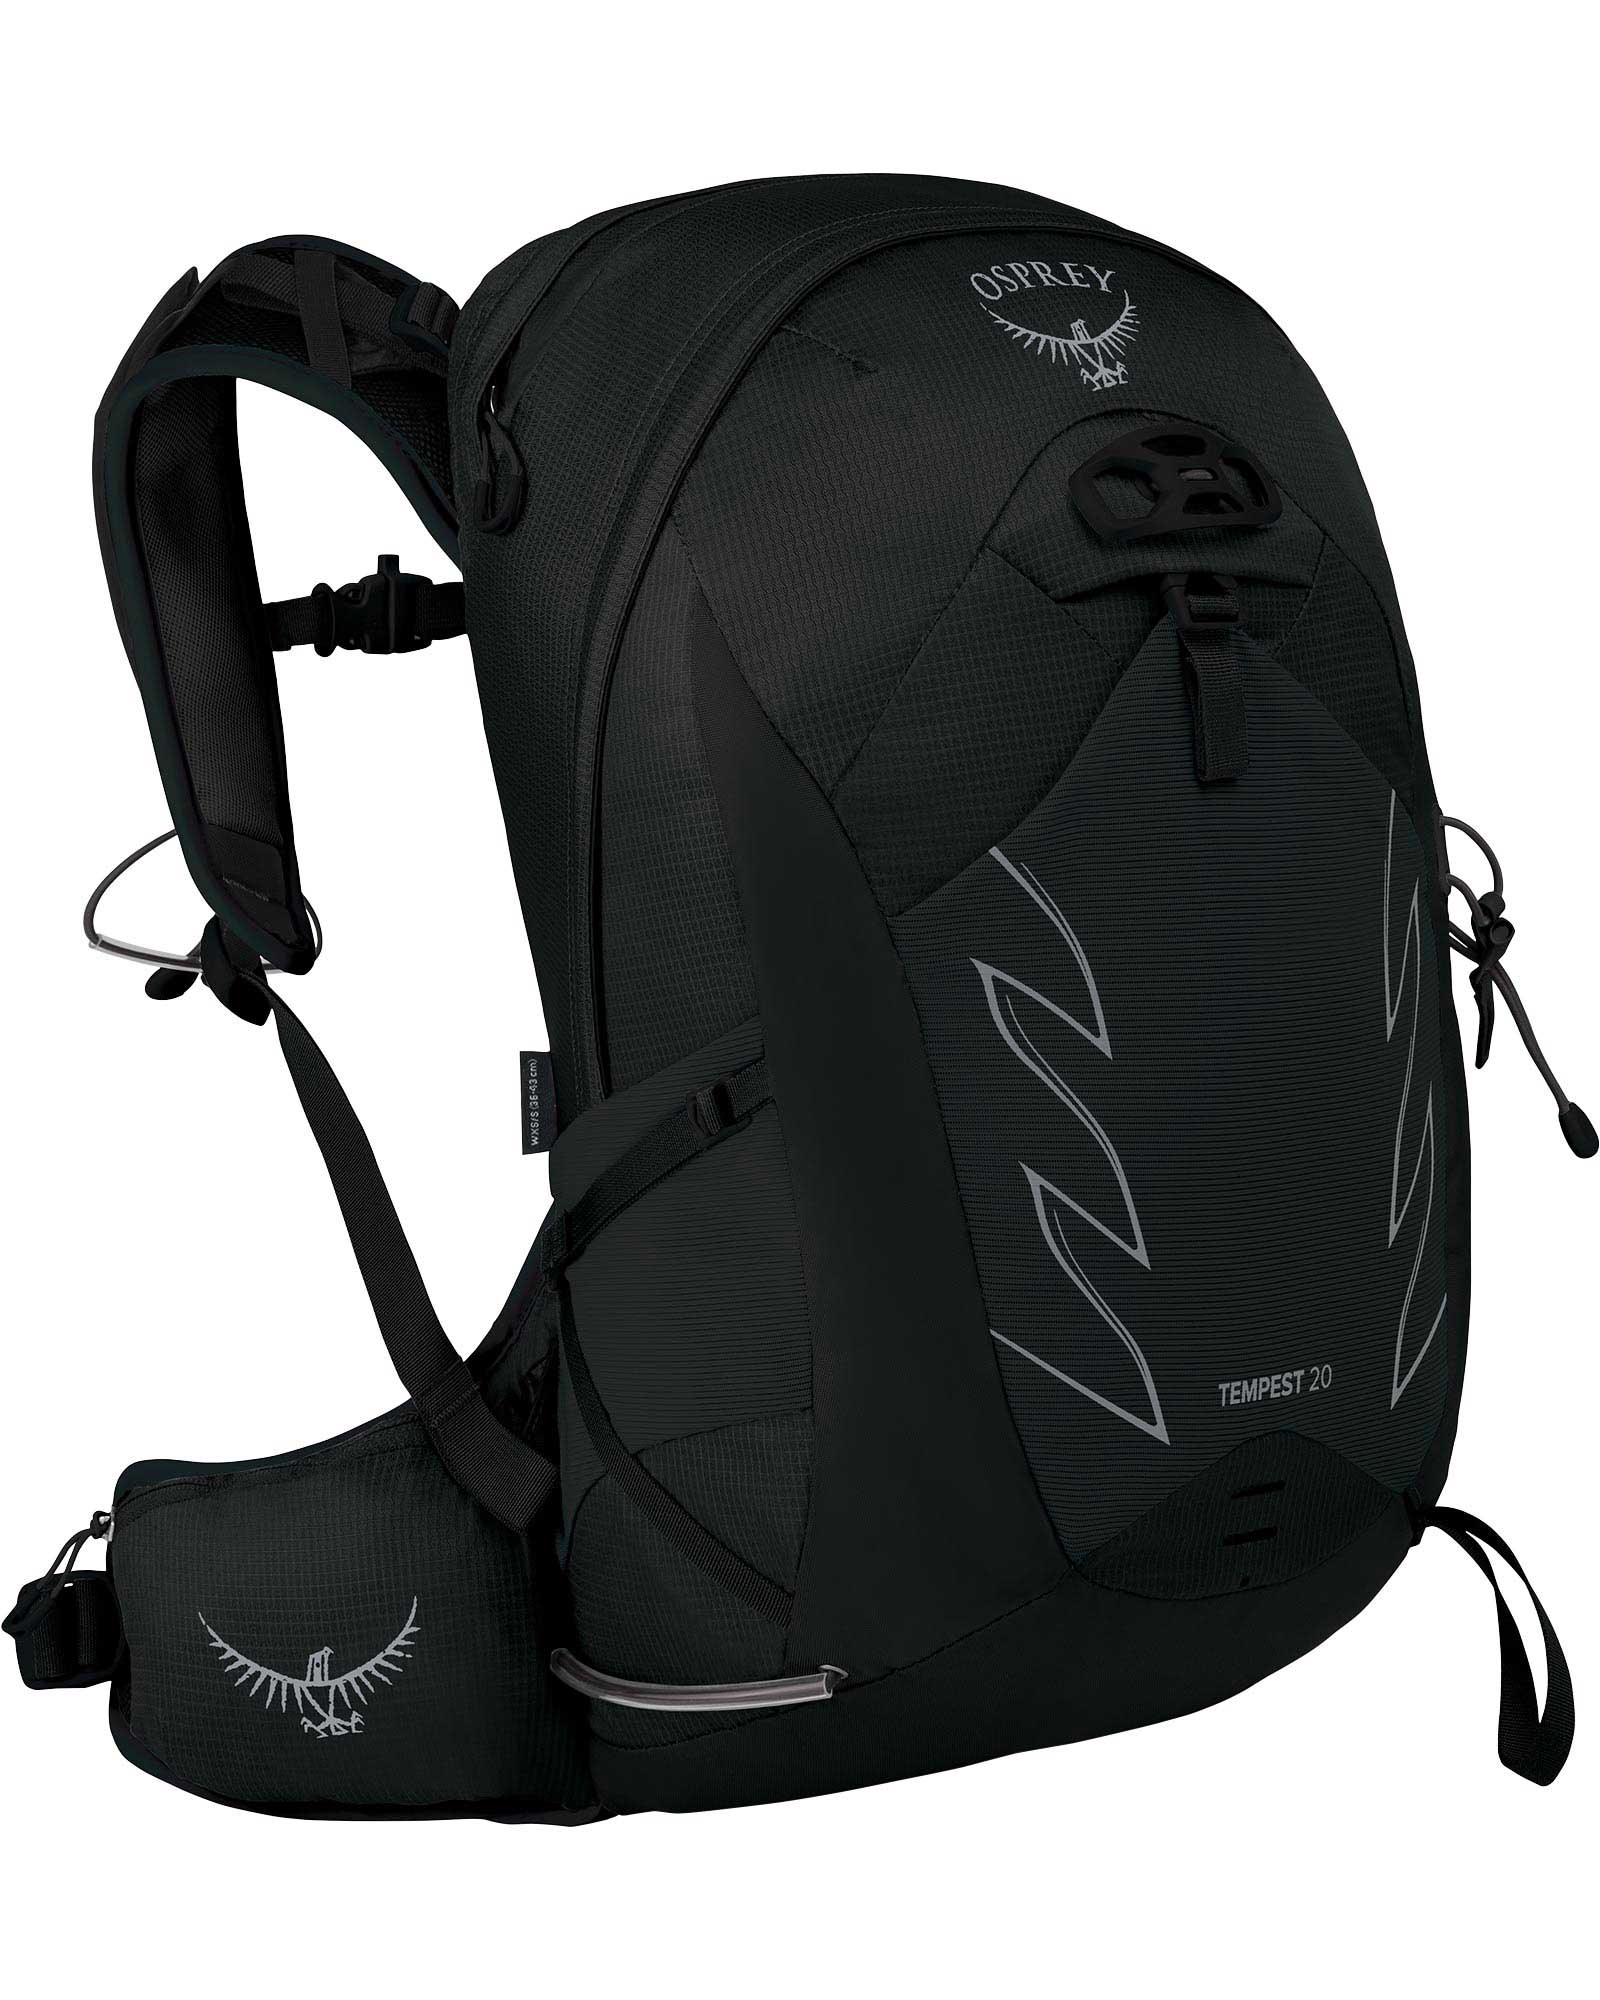 Osprey Tempest 20 Women’s Backpack - Stealth Black XS/S